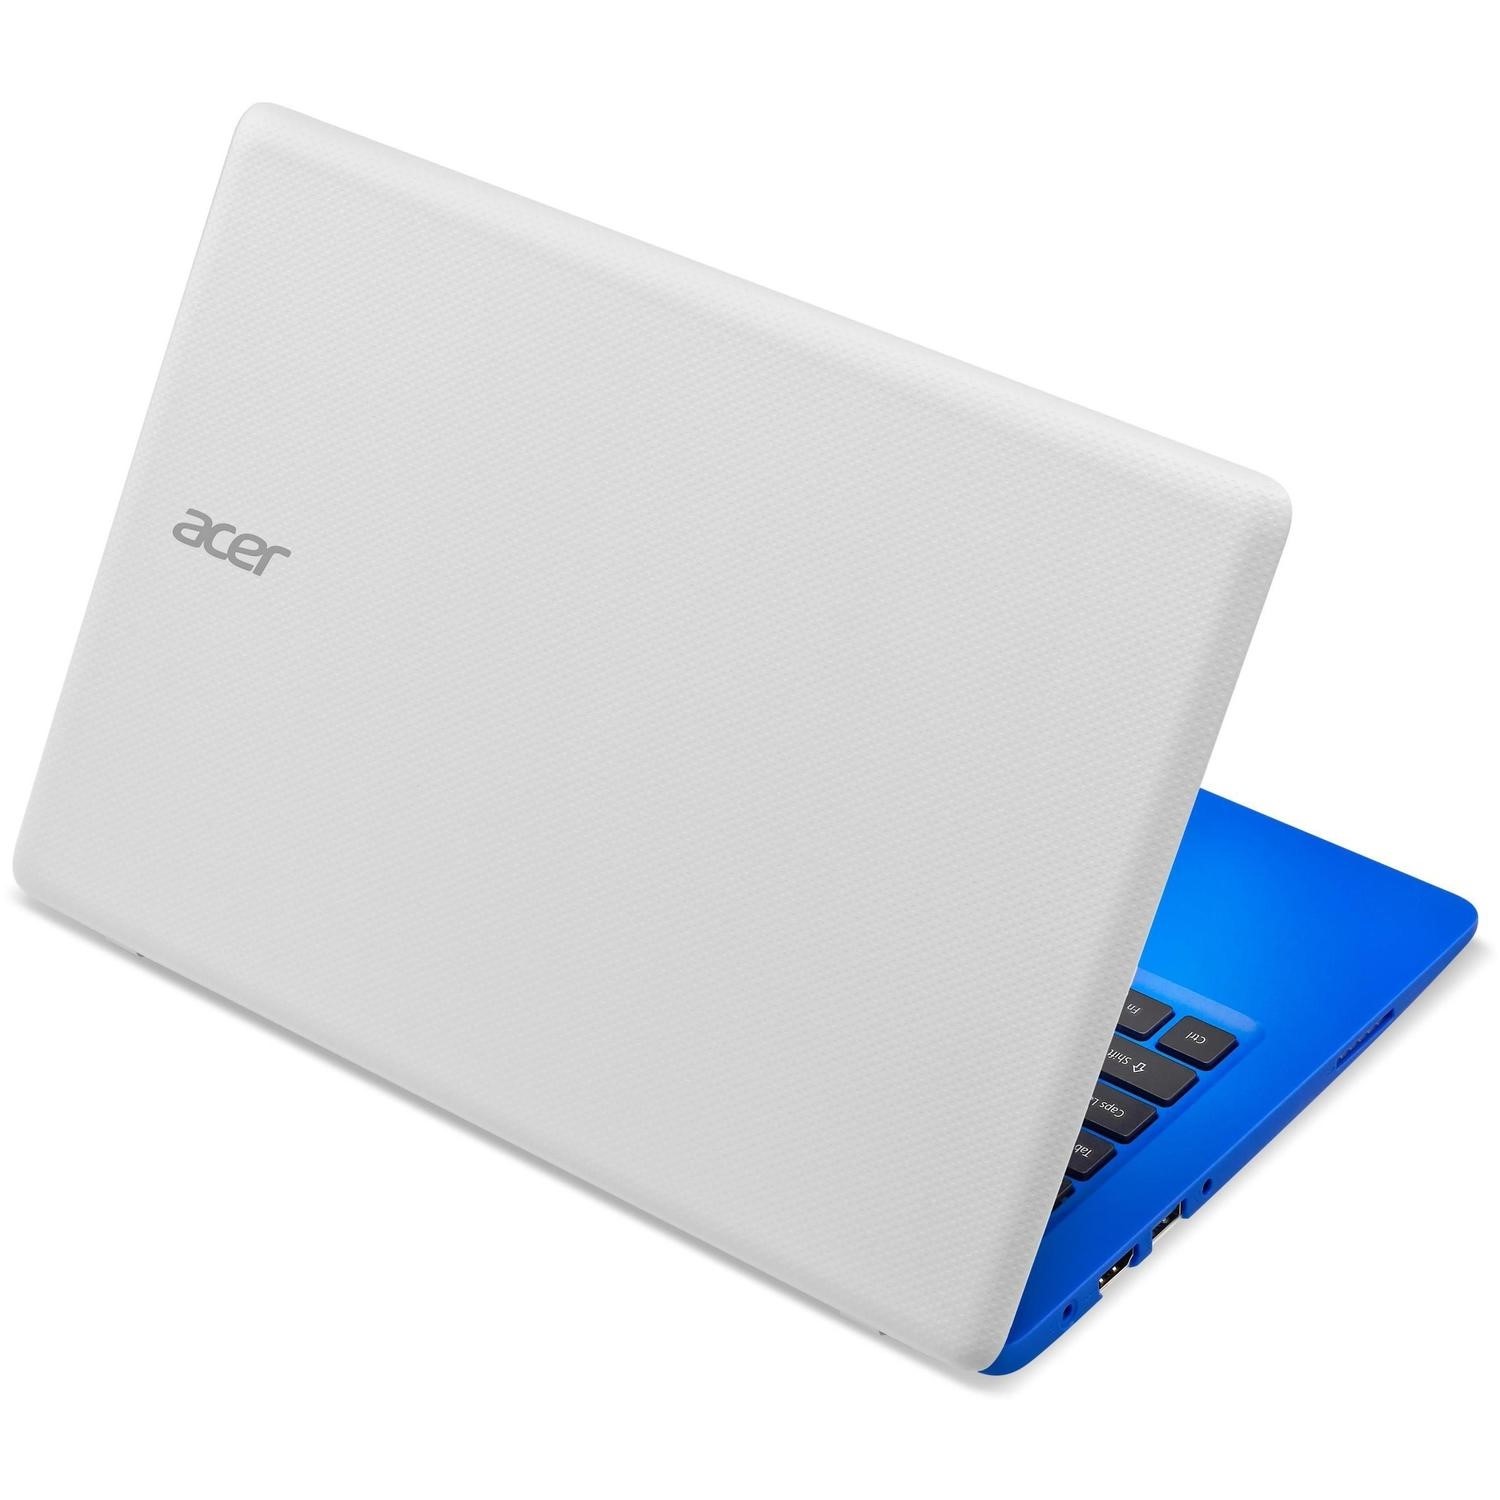 Refurbished Acer Aspire AO1-131-C726 Intel Celeron N3050 2GB 32GB 11.6 Inch  Windows 10 Laptop in Blue